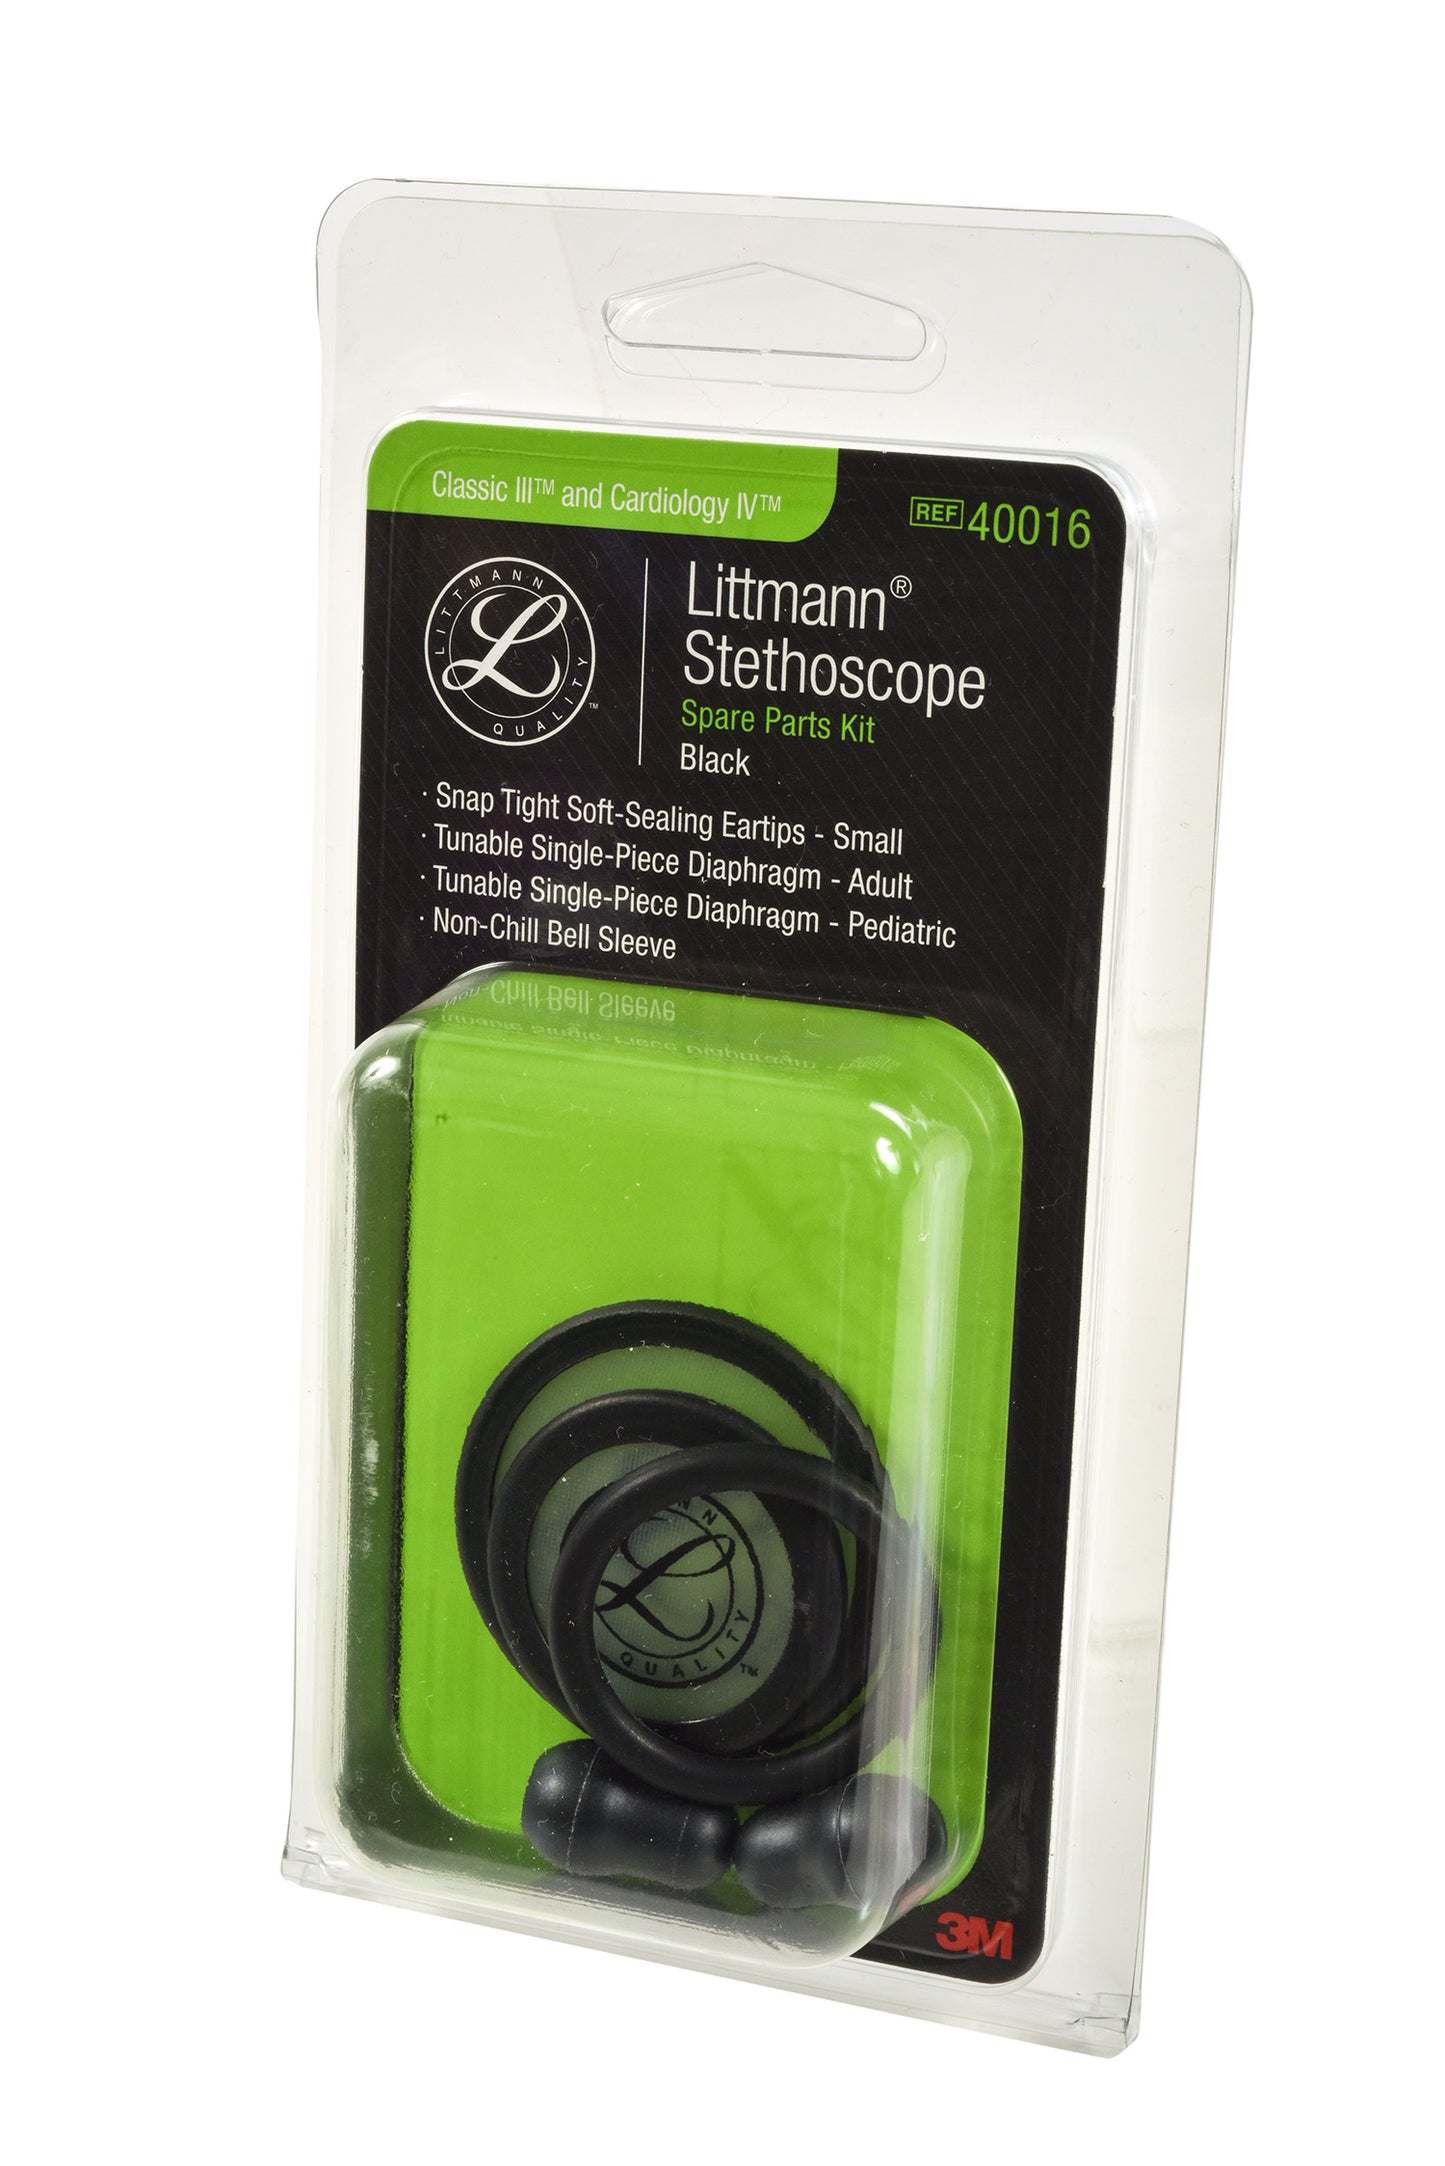 3M Littmann Stethoscope Spare Parts Kit - CORE Digital/Classic III/Car